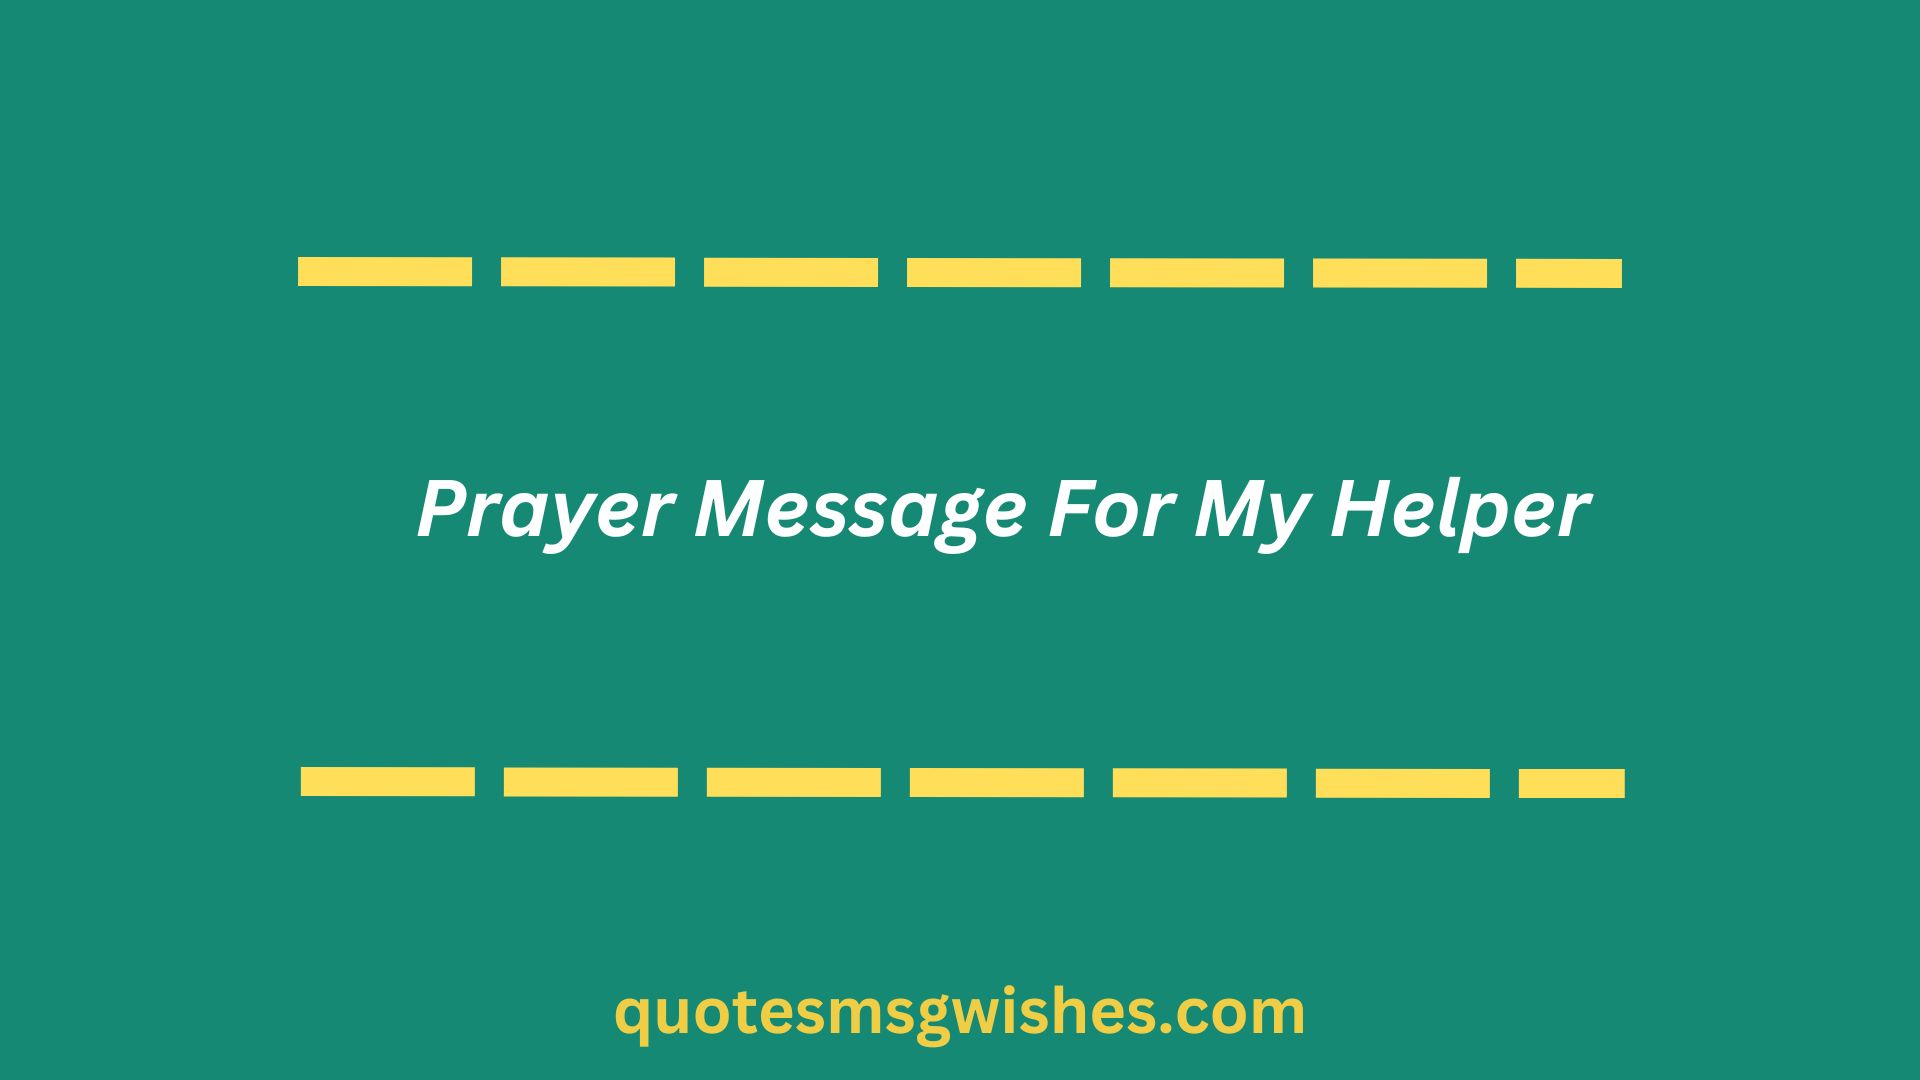 Prayer Message For My Helper